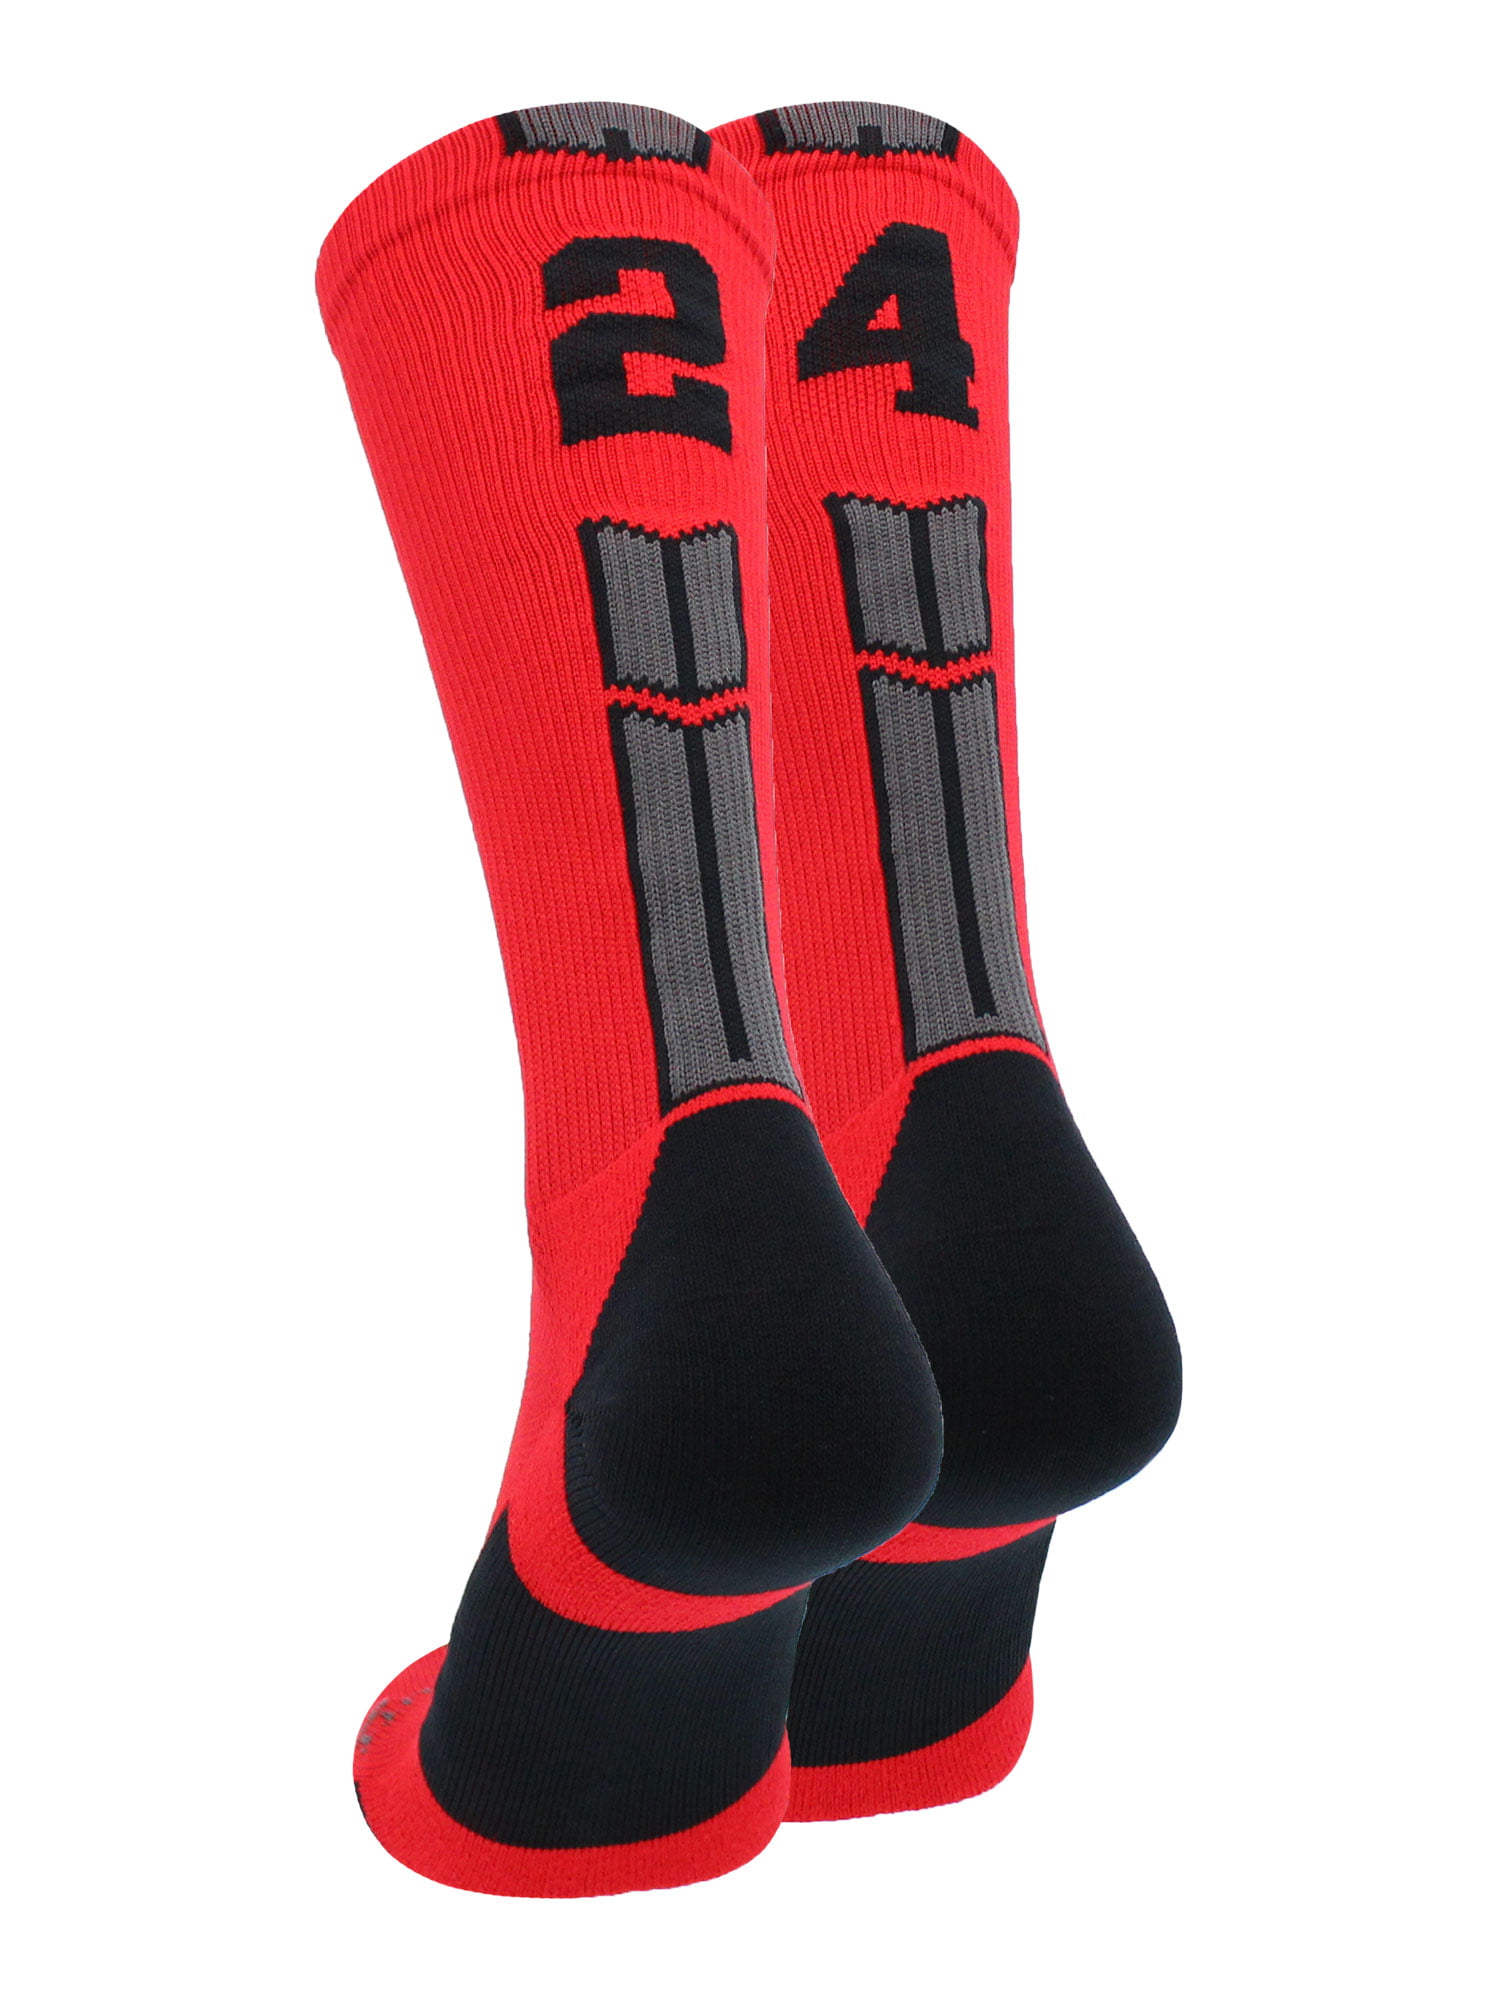 MadSportsStuff Navy Player ID Custom Number Over the Calf Socks for Softball Baseball Football Boys and Girls 